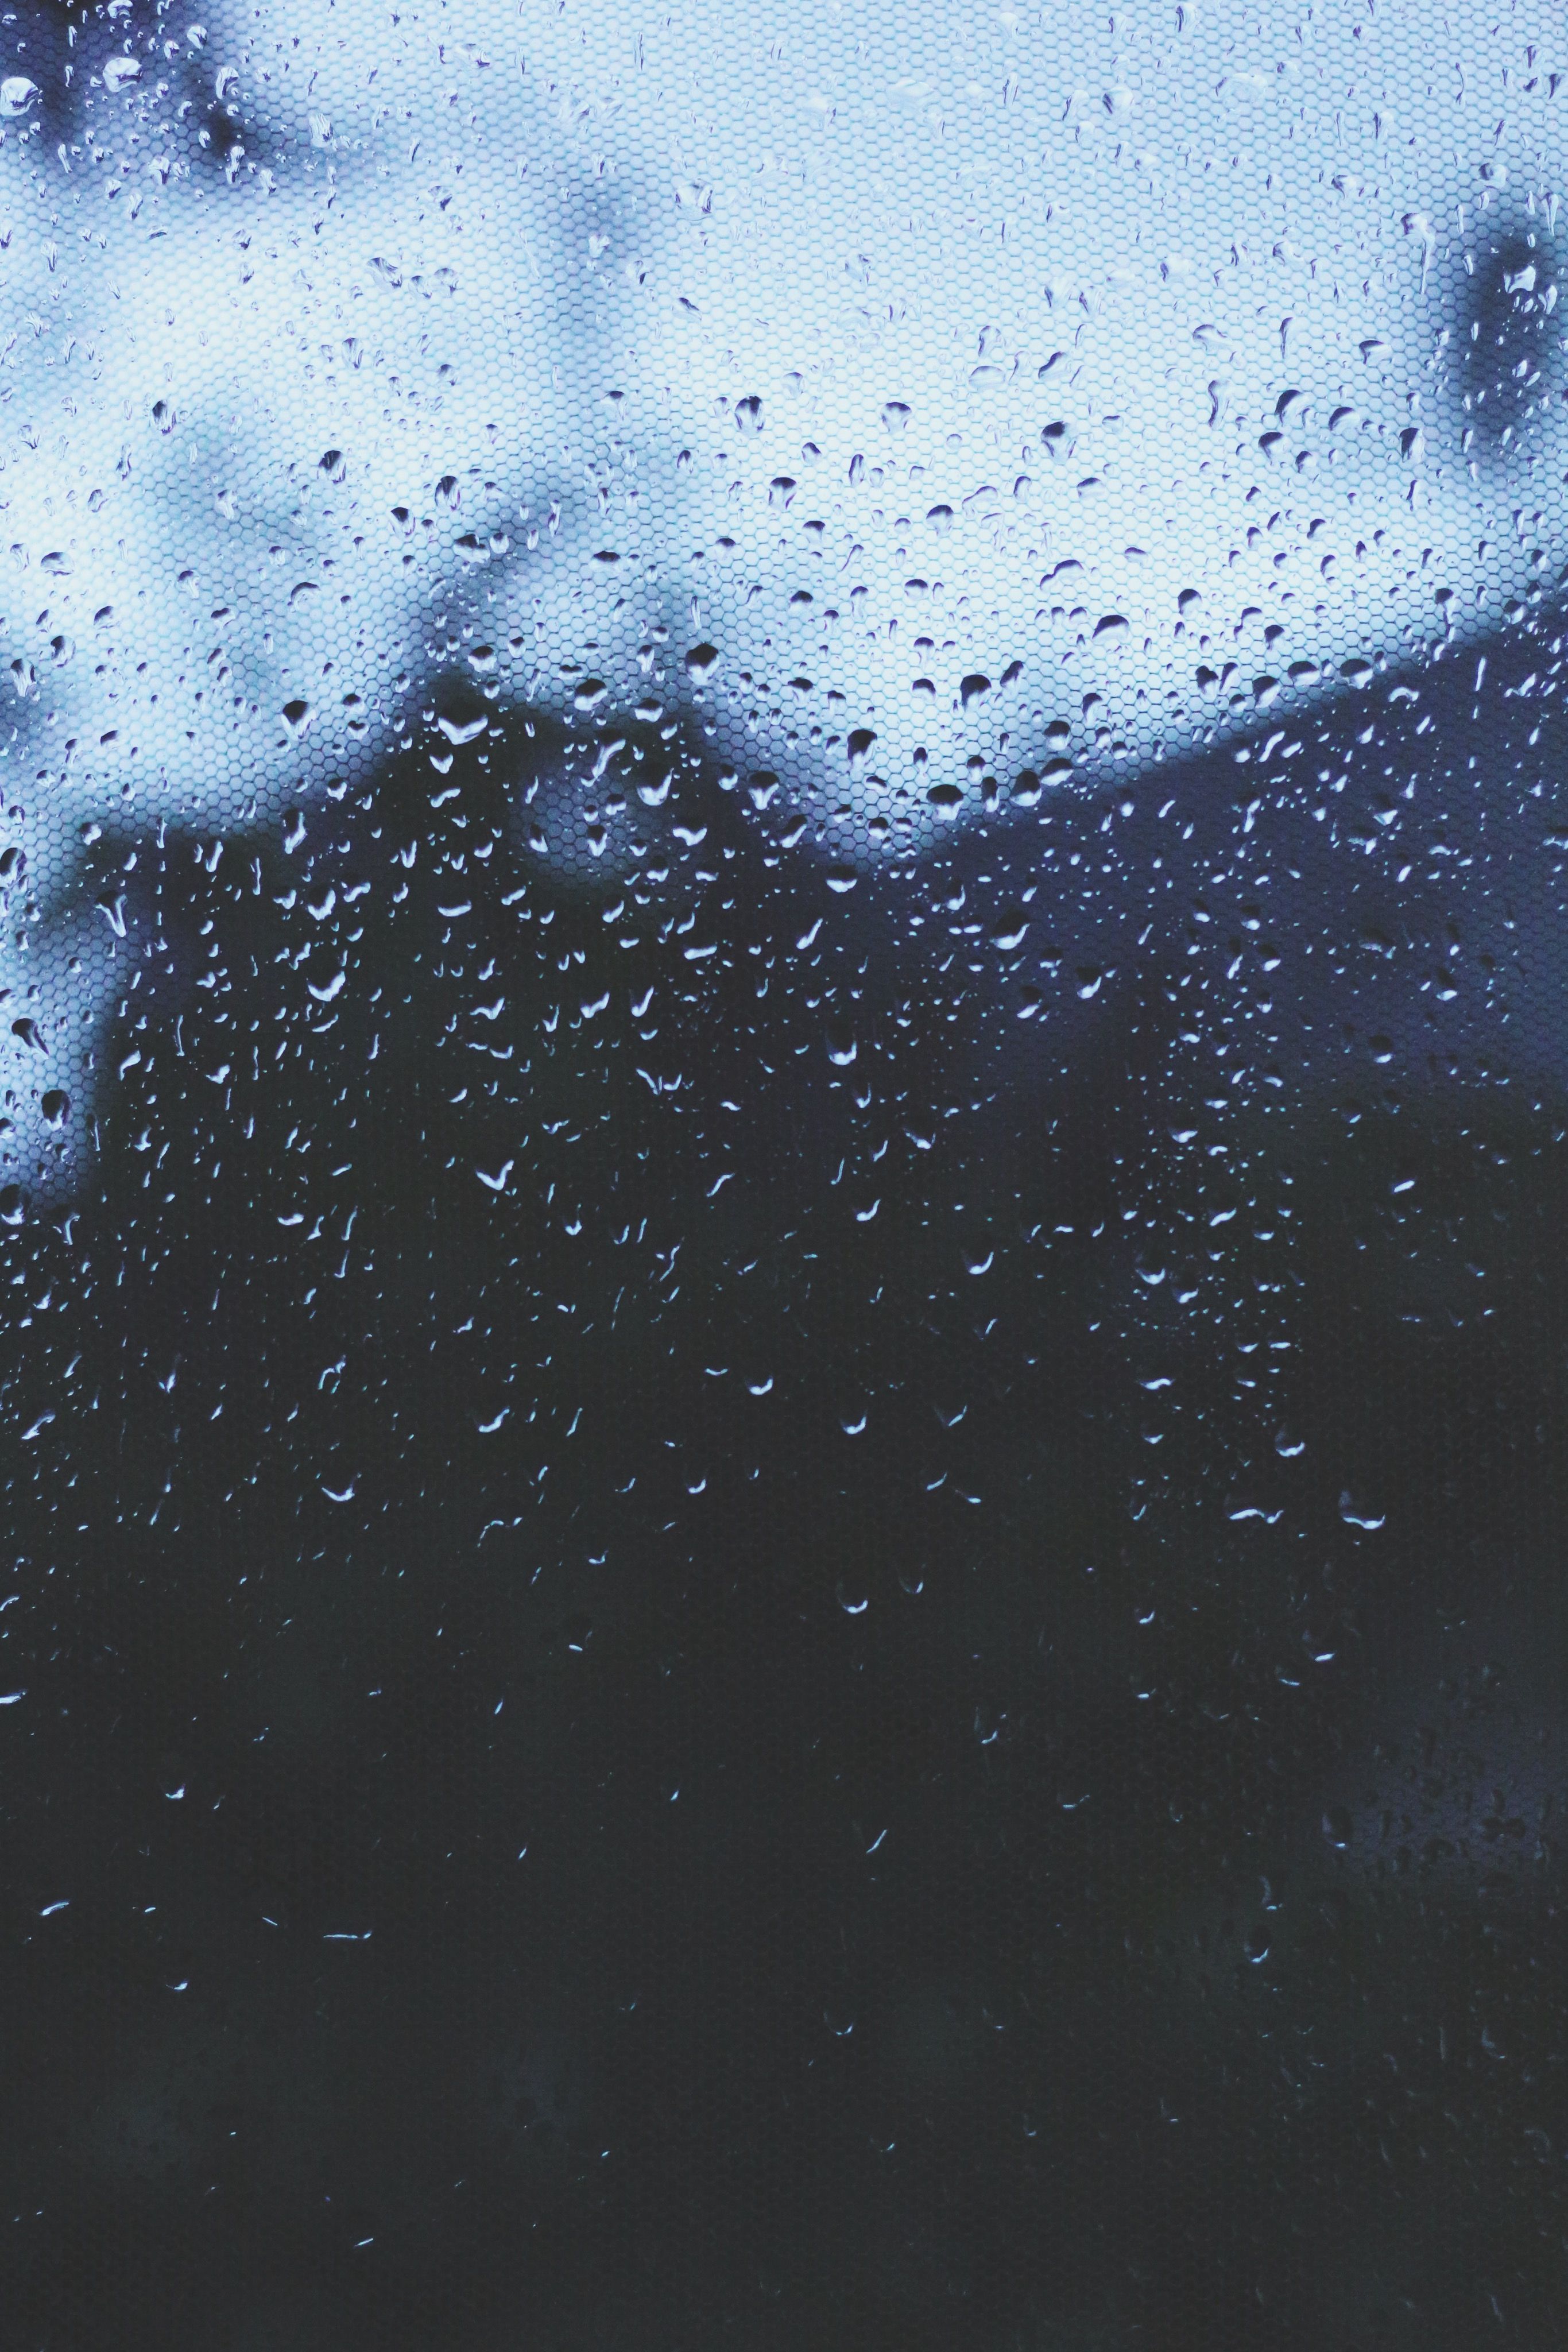 A rain droplet on the window of an office building - Rain